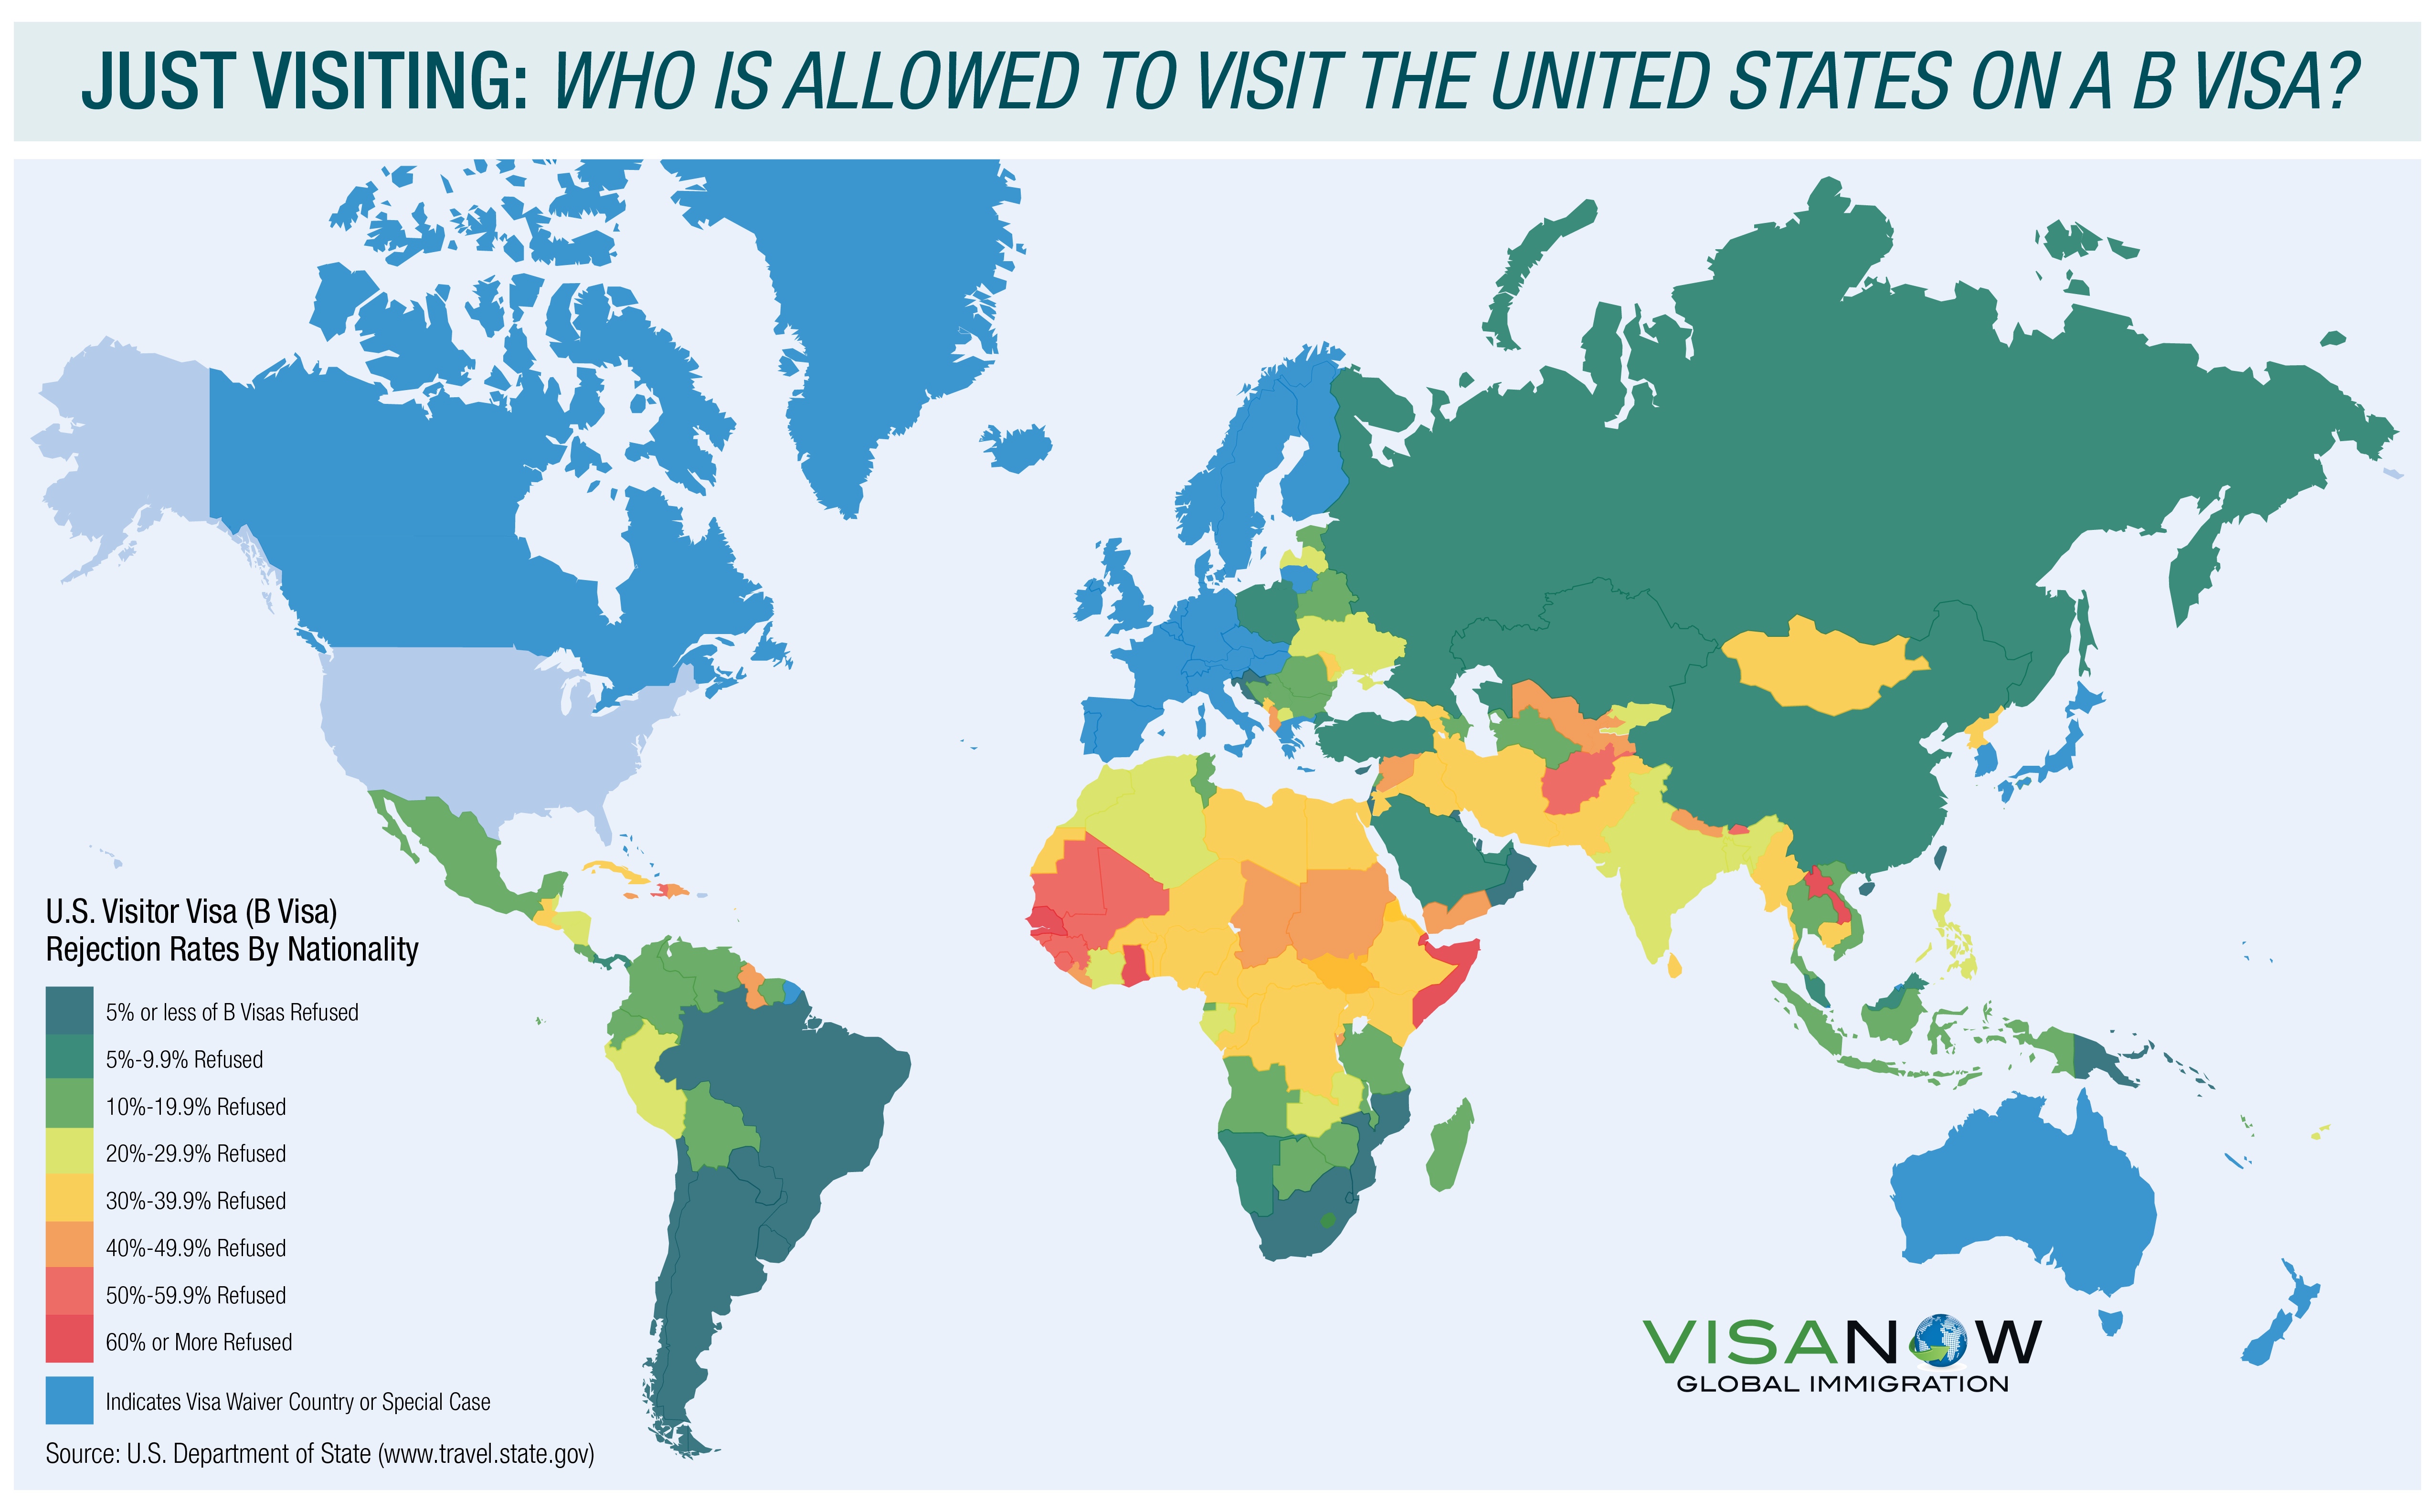 Visa Now Map